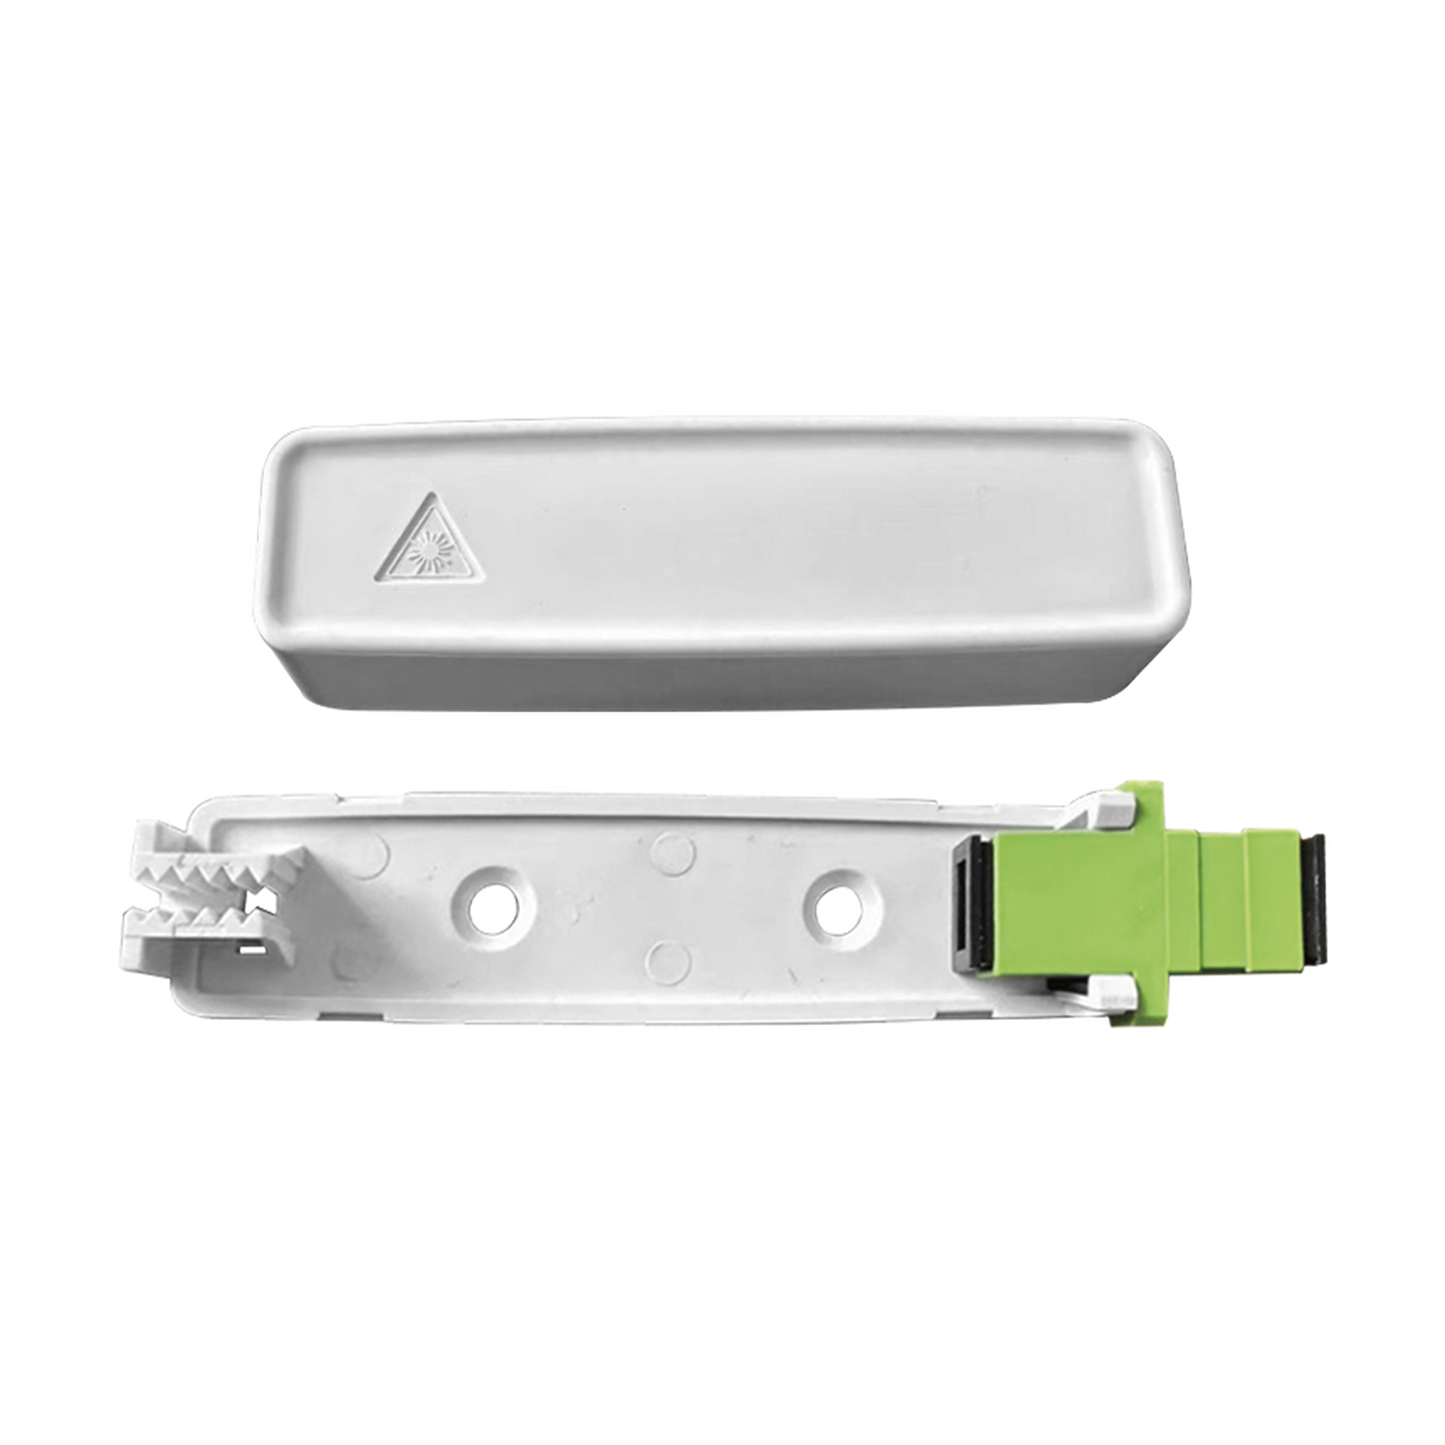 Mini Fiber Optic Terminal Box (Rosette) with a SC/APC Coupler, White color